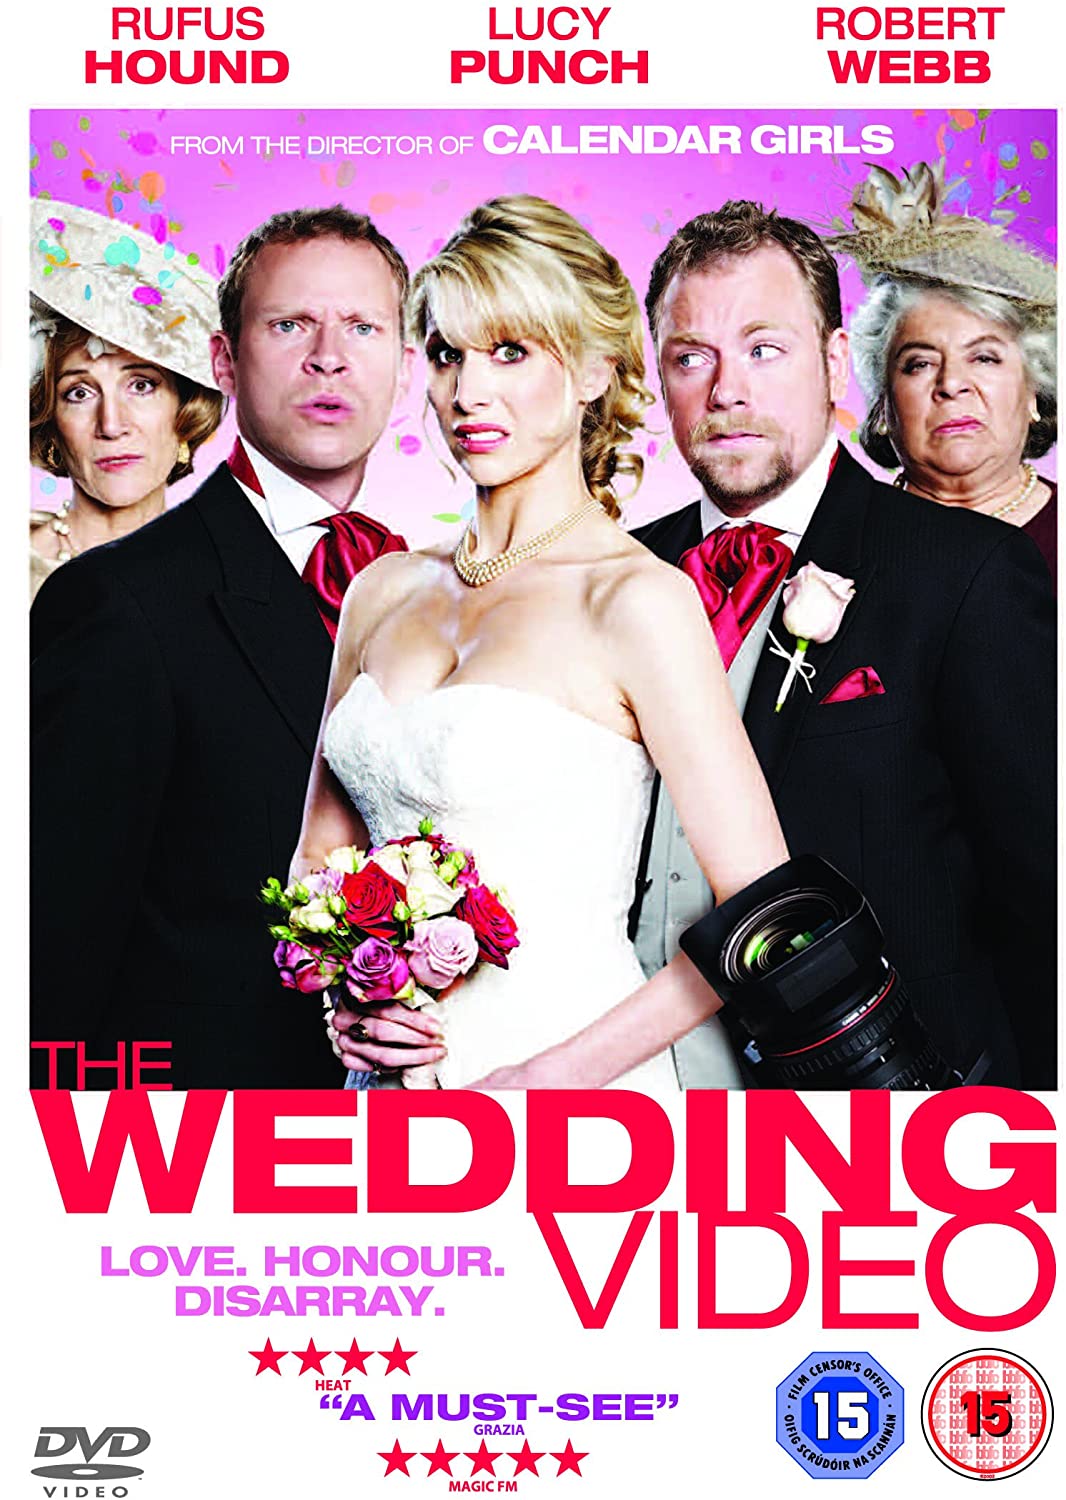 The Wedding Video - Comedy [DVD]